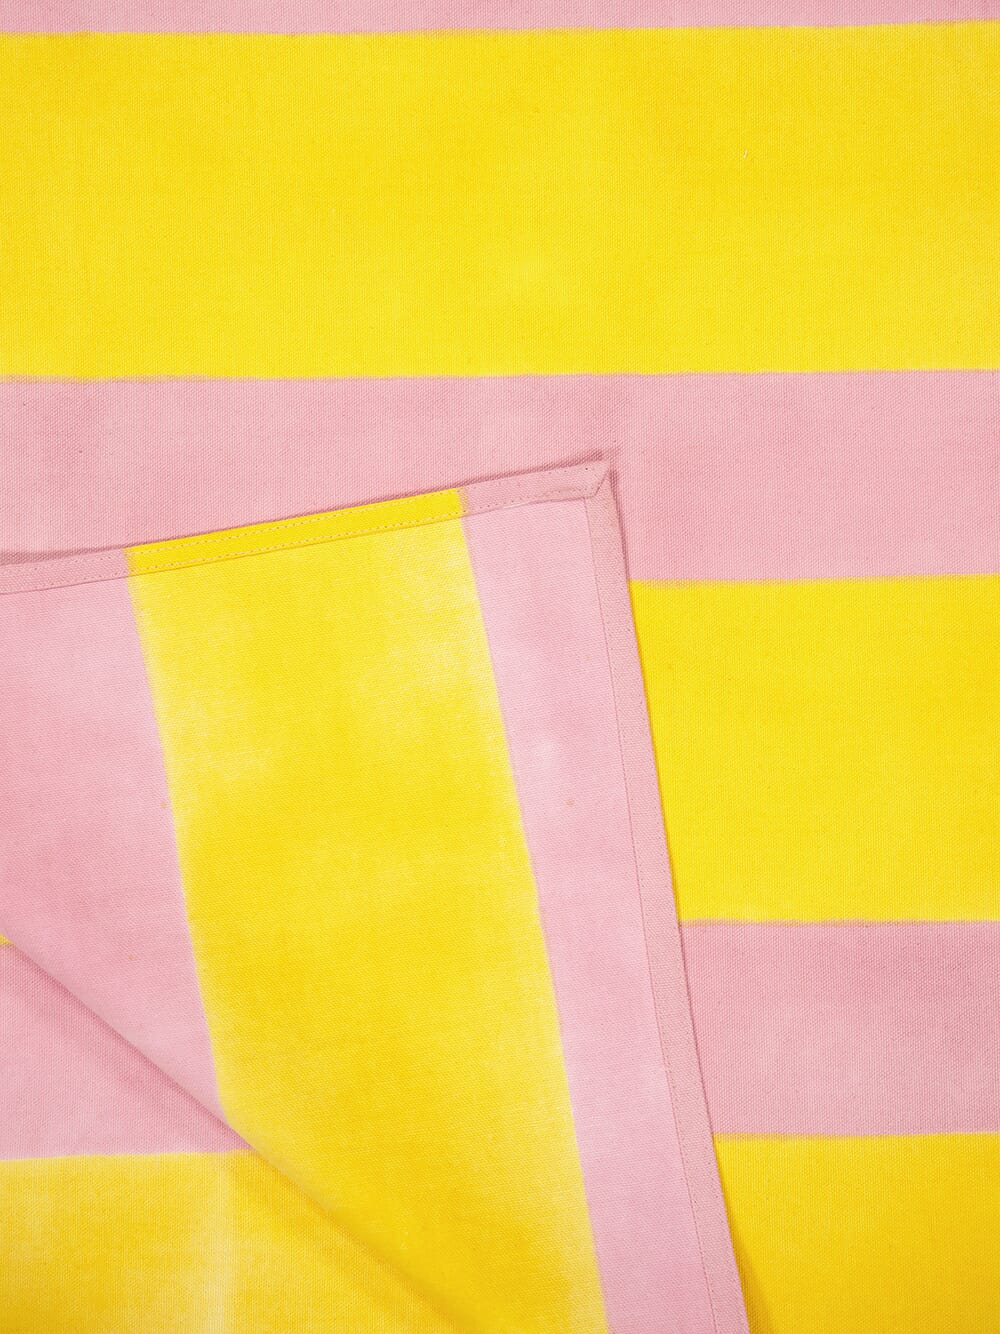 Striped Block Print Yellow Tablecloth